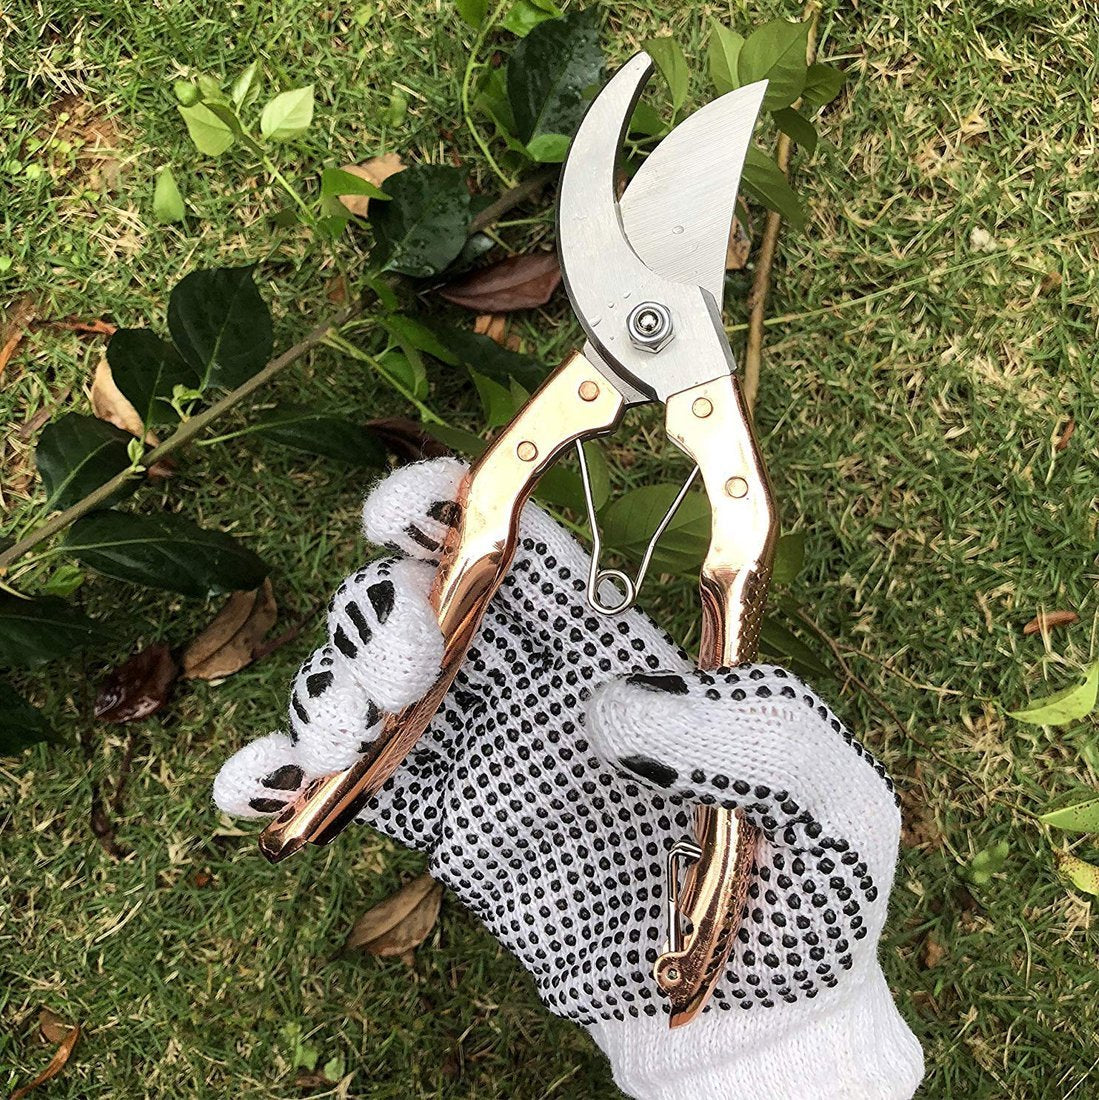 ambitionofcreativity in gardening tools garden shears pruners scissor